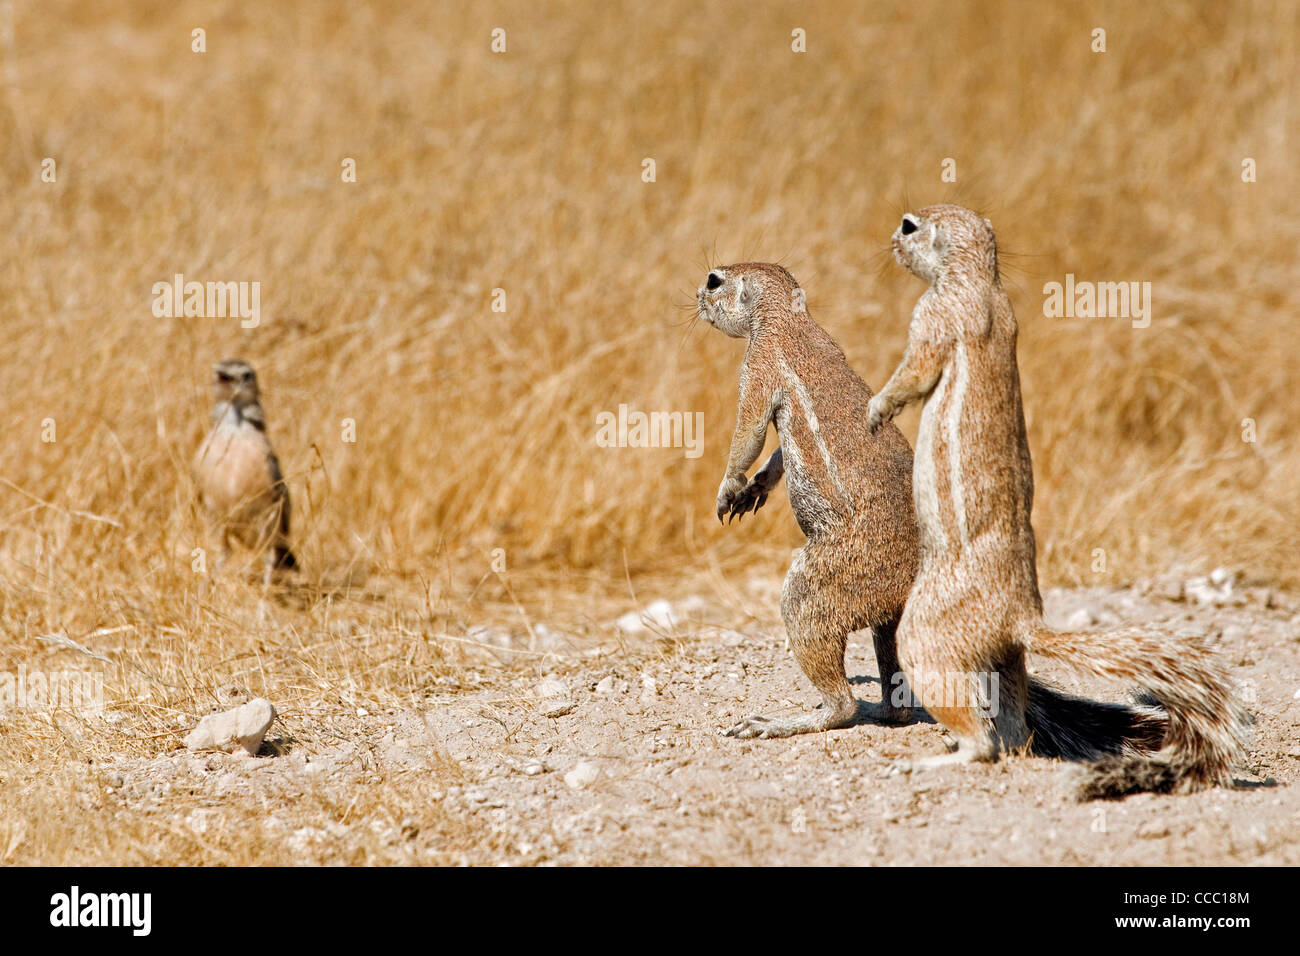 Curious Cape Ground Squirrels (Xerus Inauris) looking at bird, Etosha National Park, Namibia Stock Photo